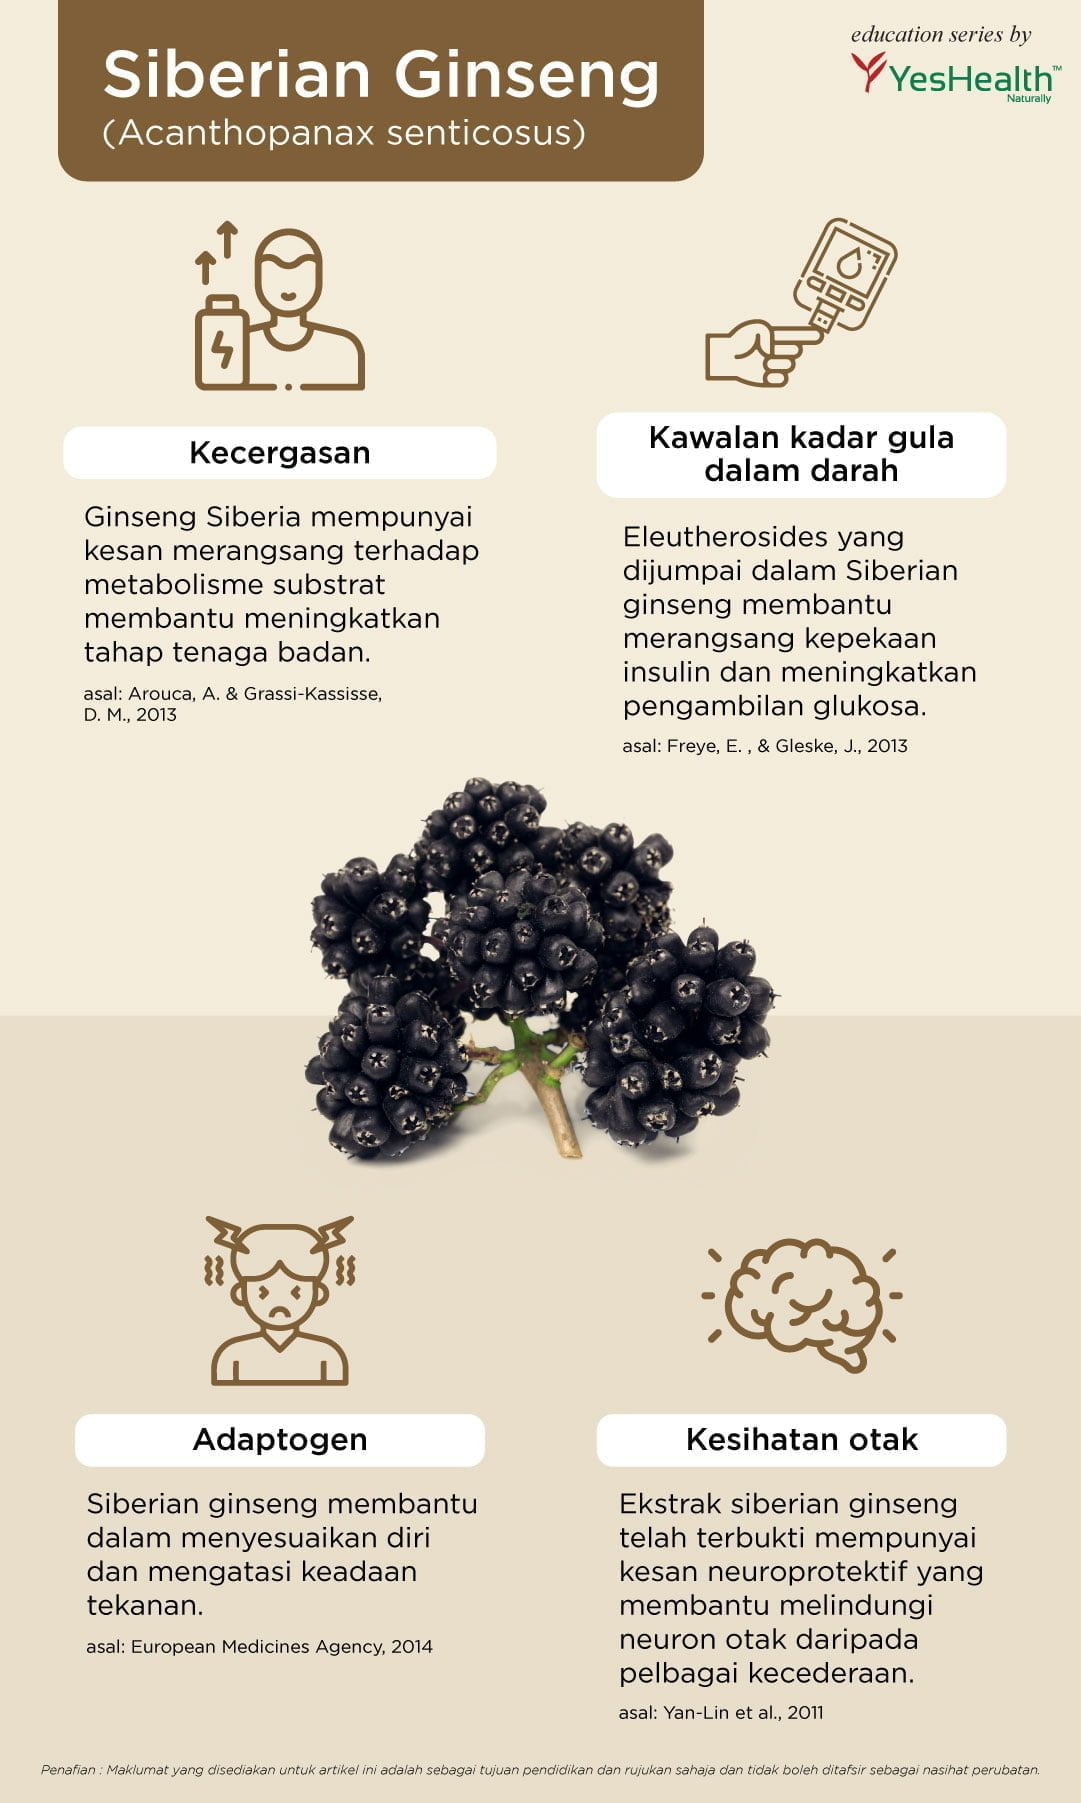 Benefits of Siberian ginseng